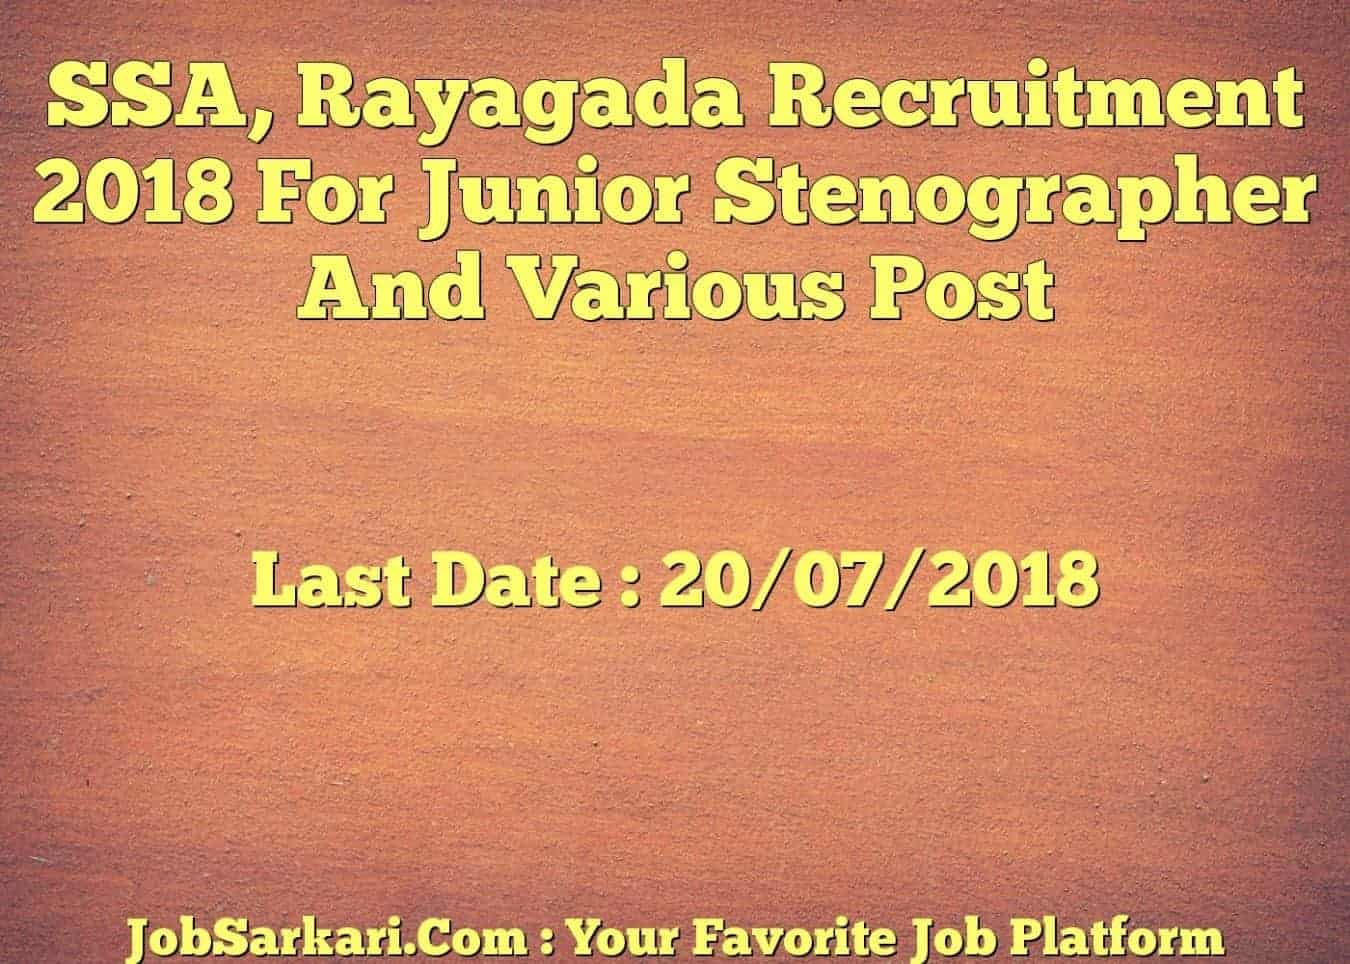 SSA, Rayagada Recruitment 2018 For Junior Stenographer And Various Post